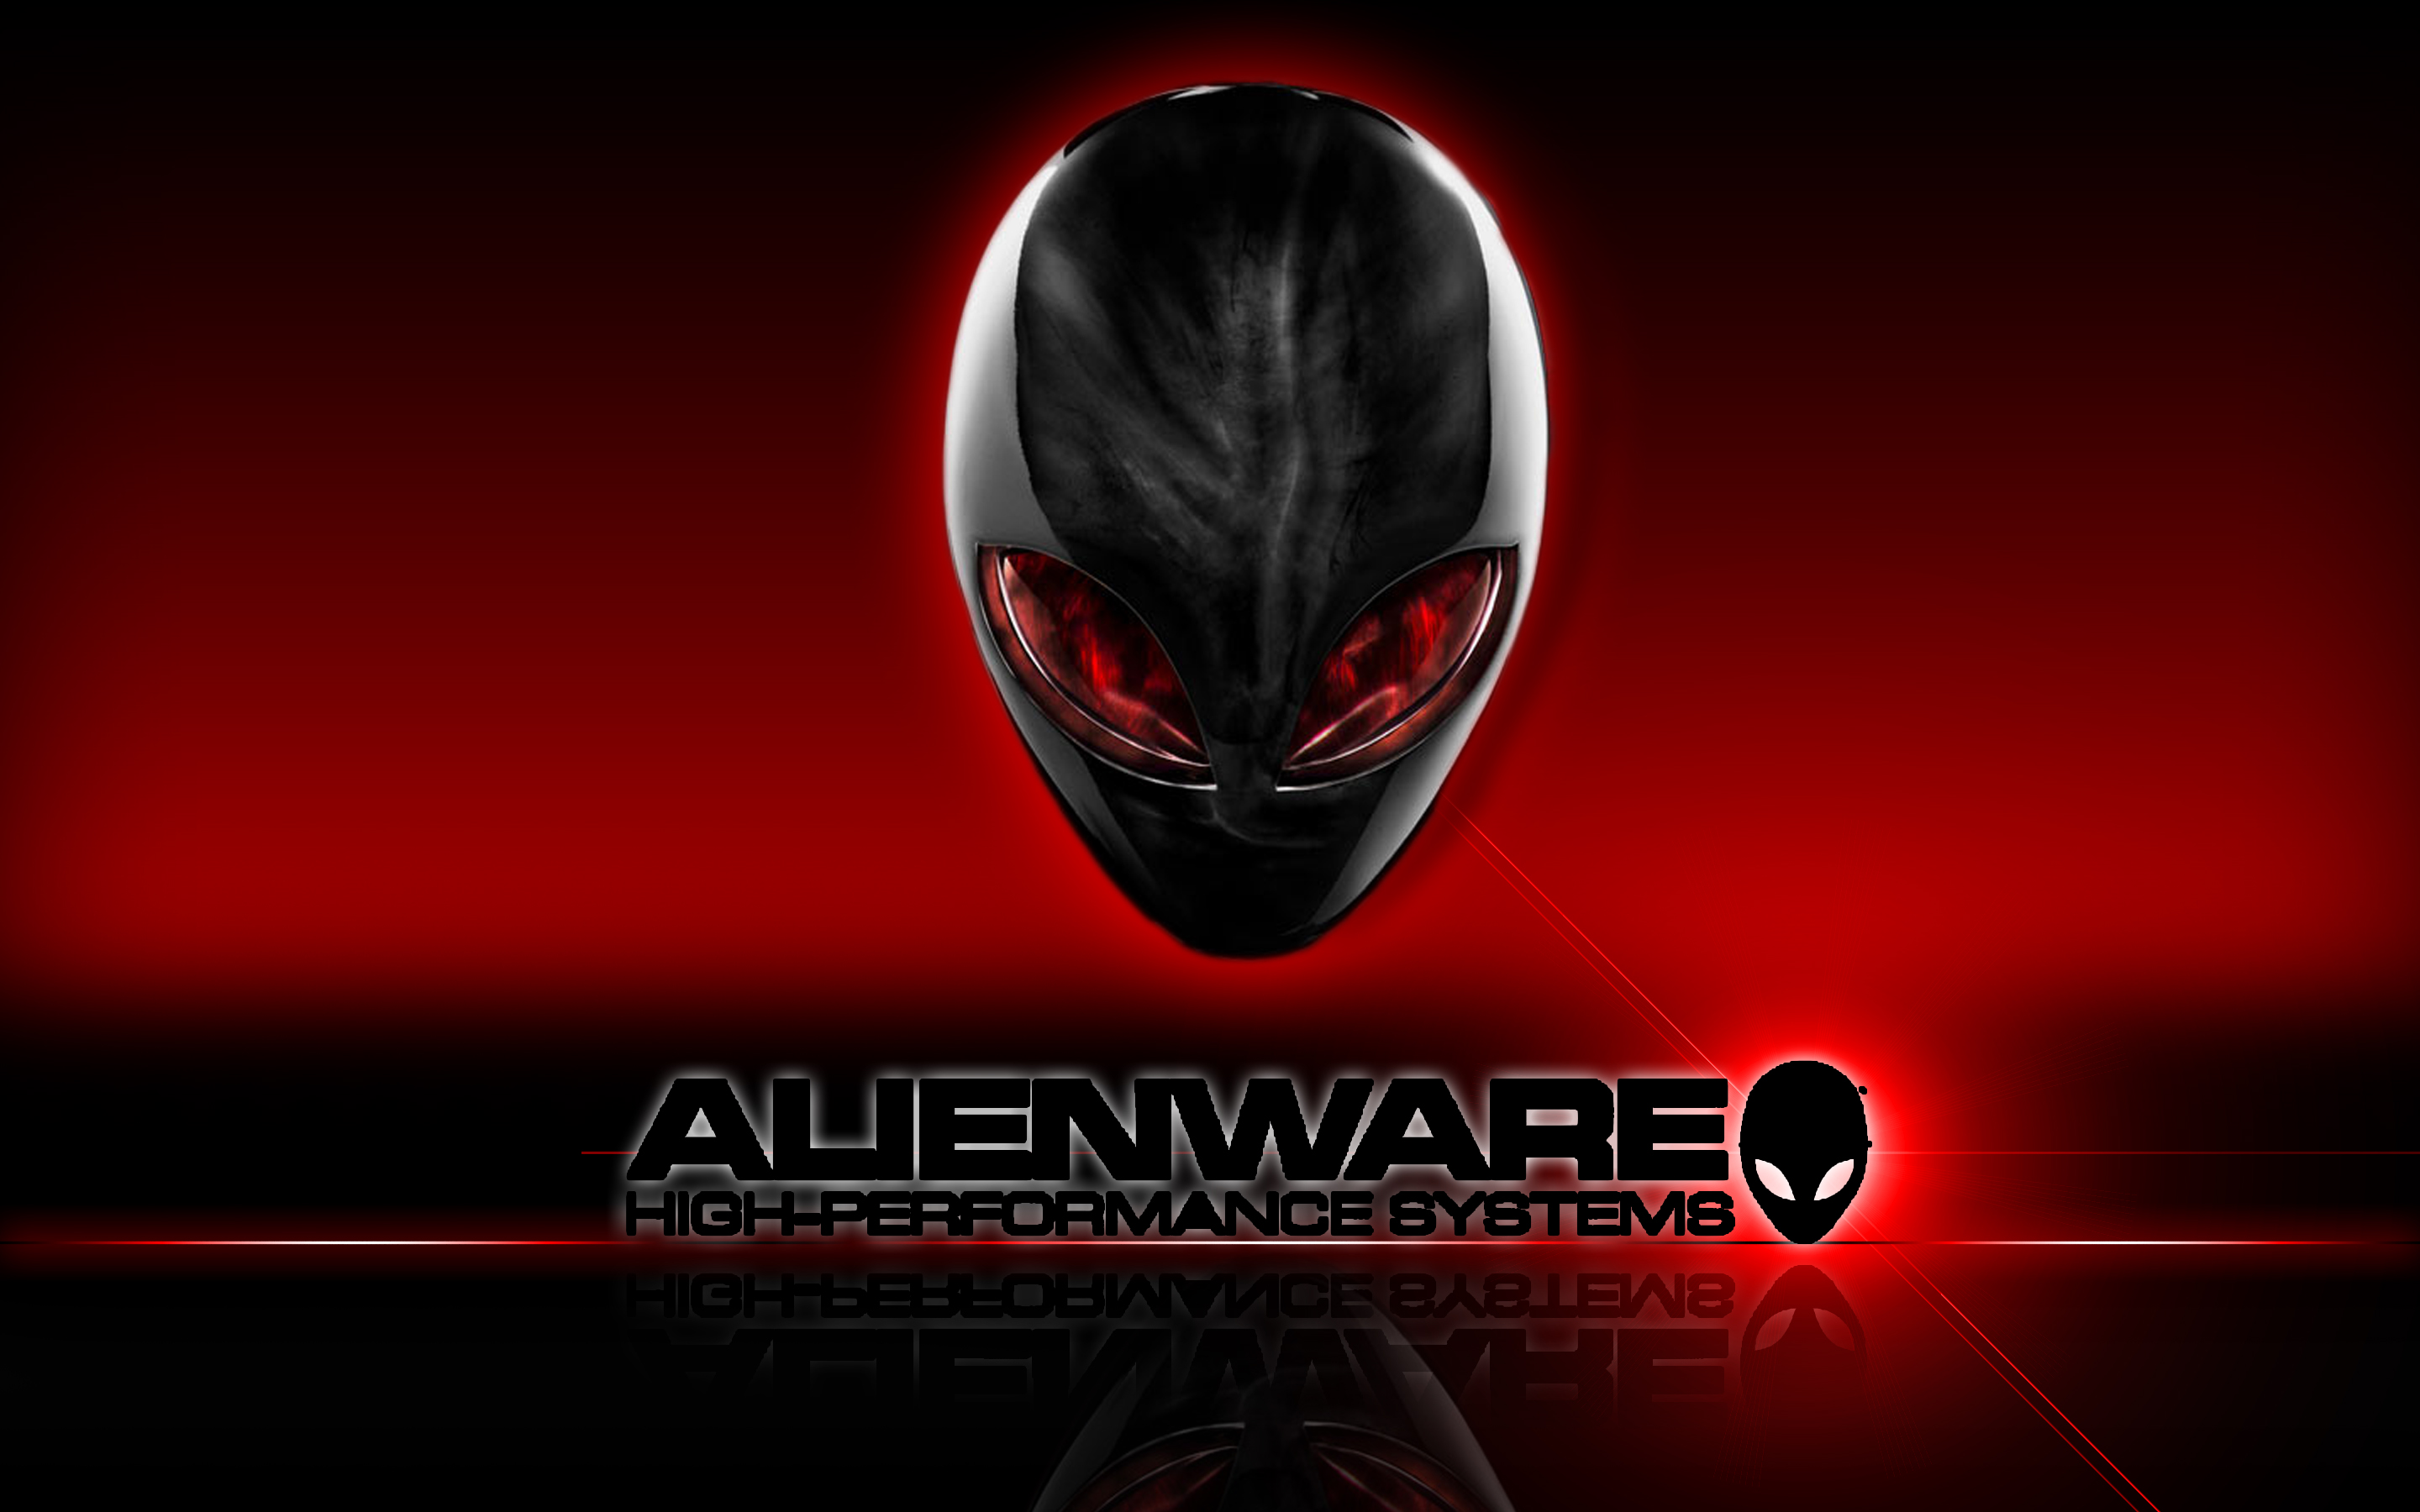 Topwindows7themes Wp Content Uploads Alienware Jpg